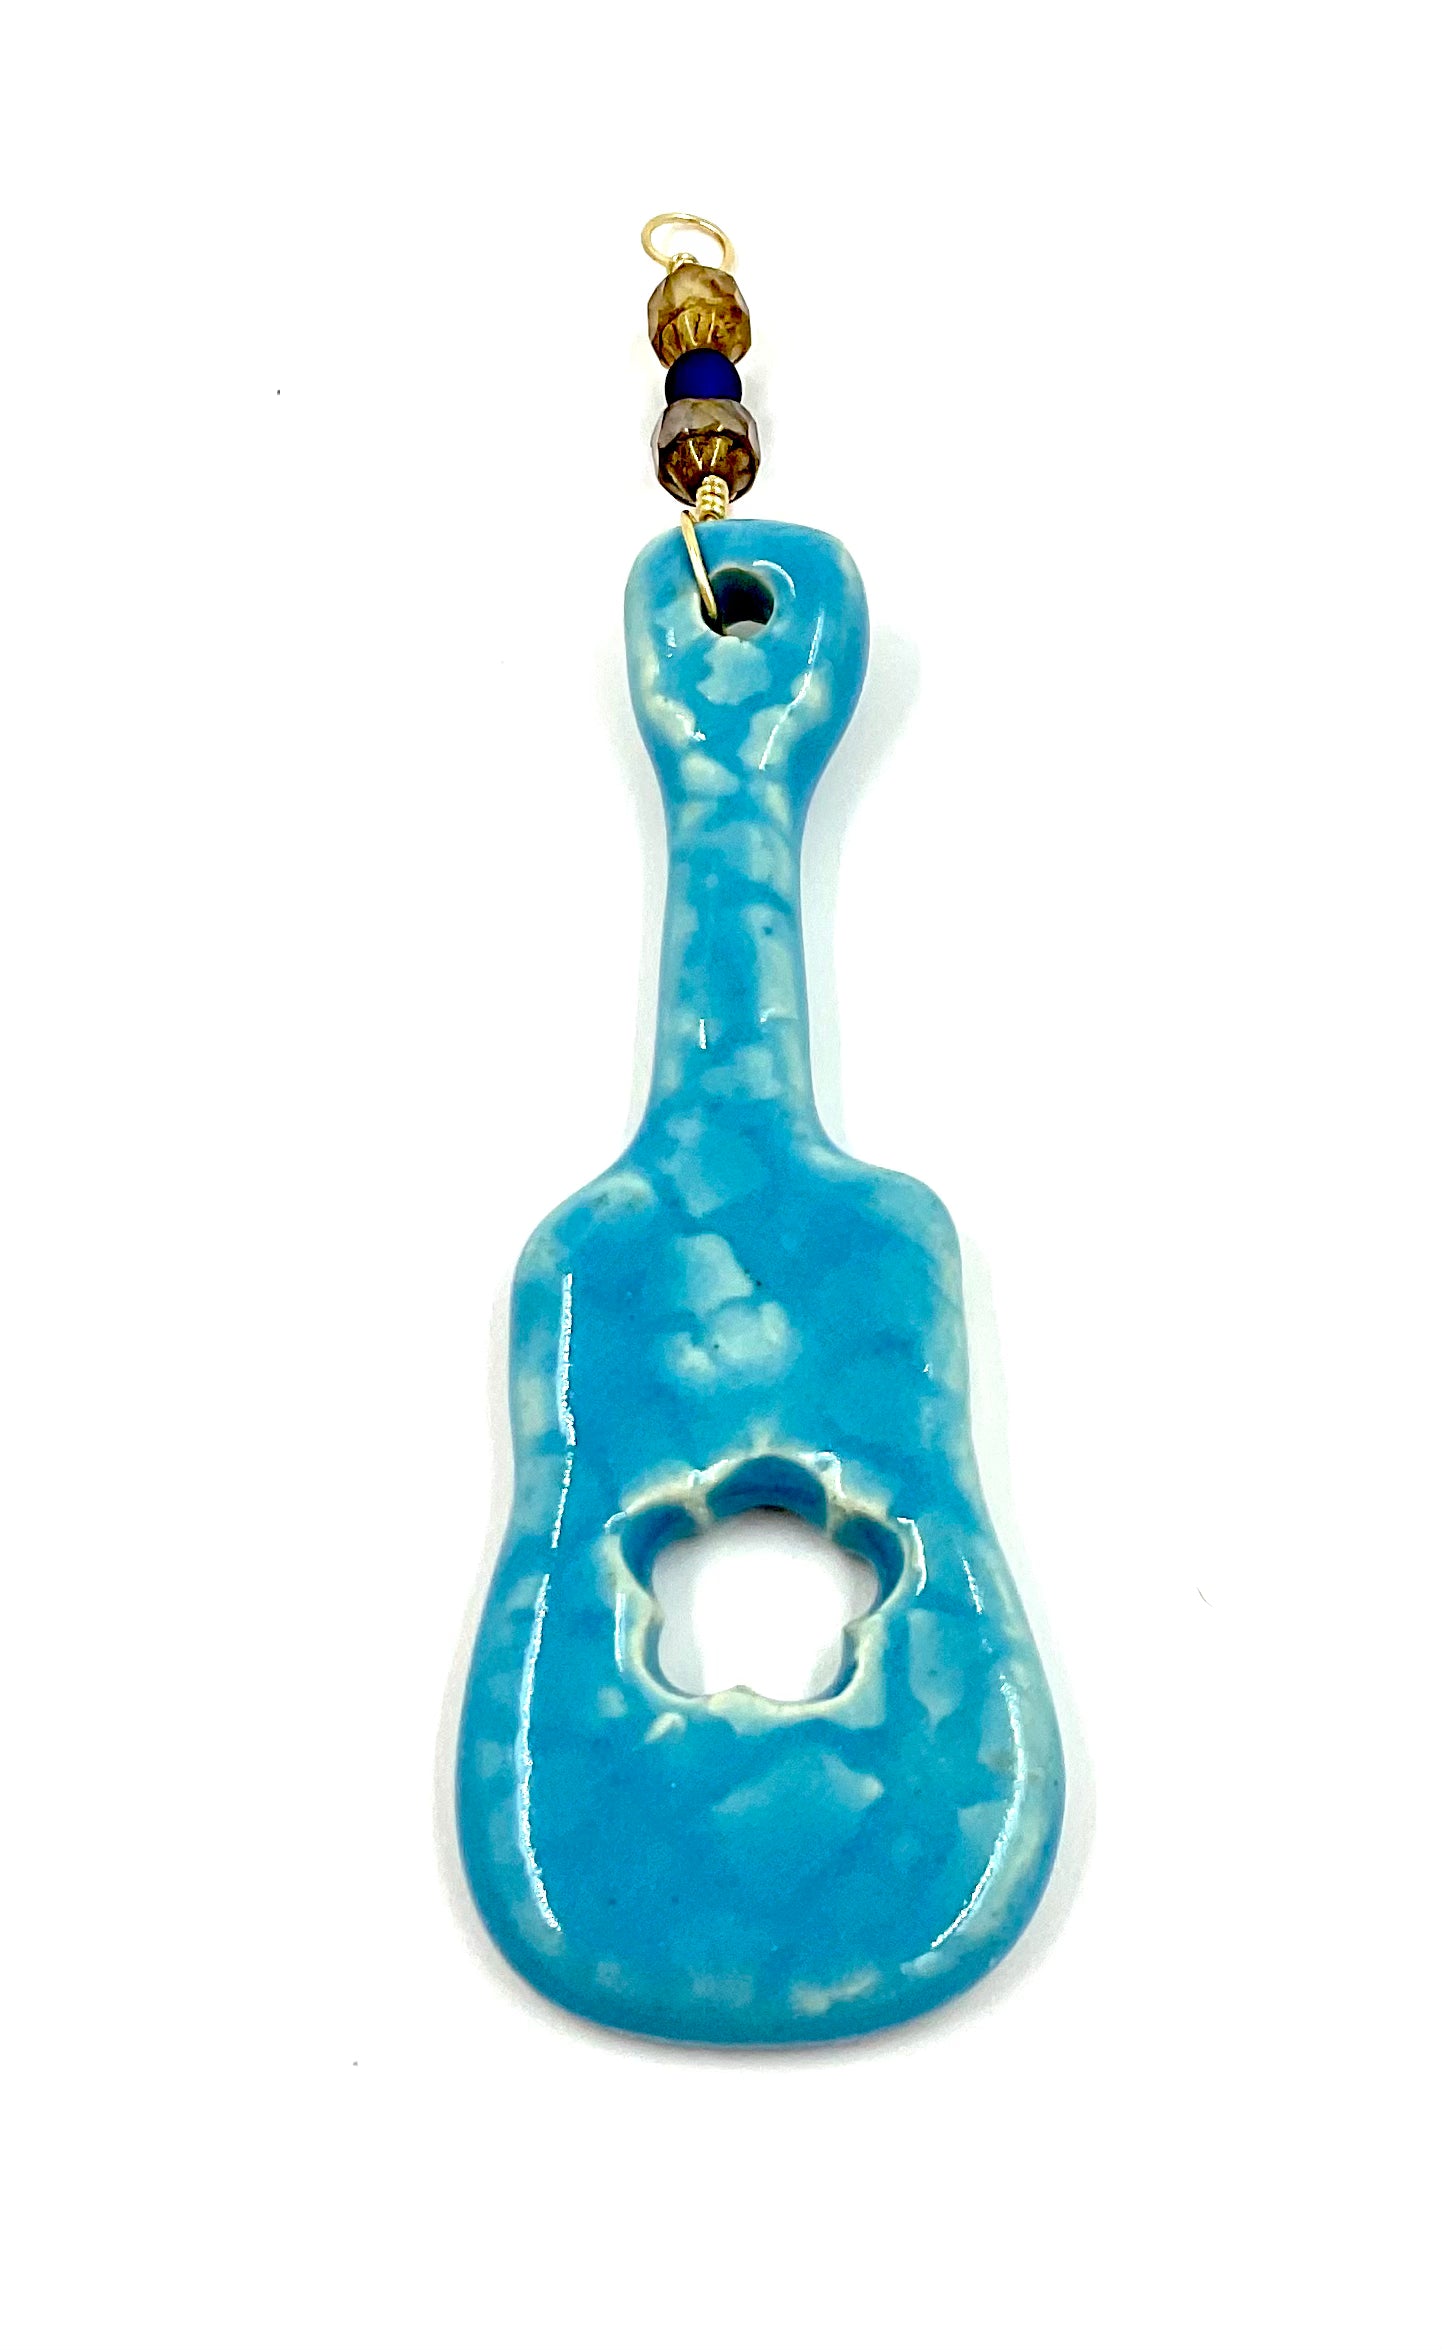 Blue Textured Guitar Ornament